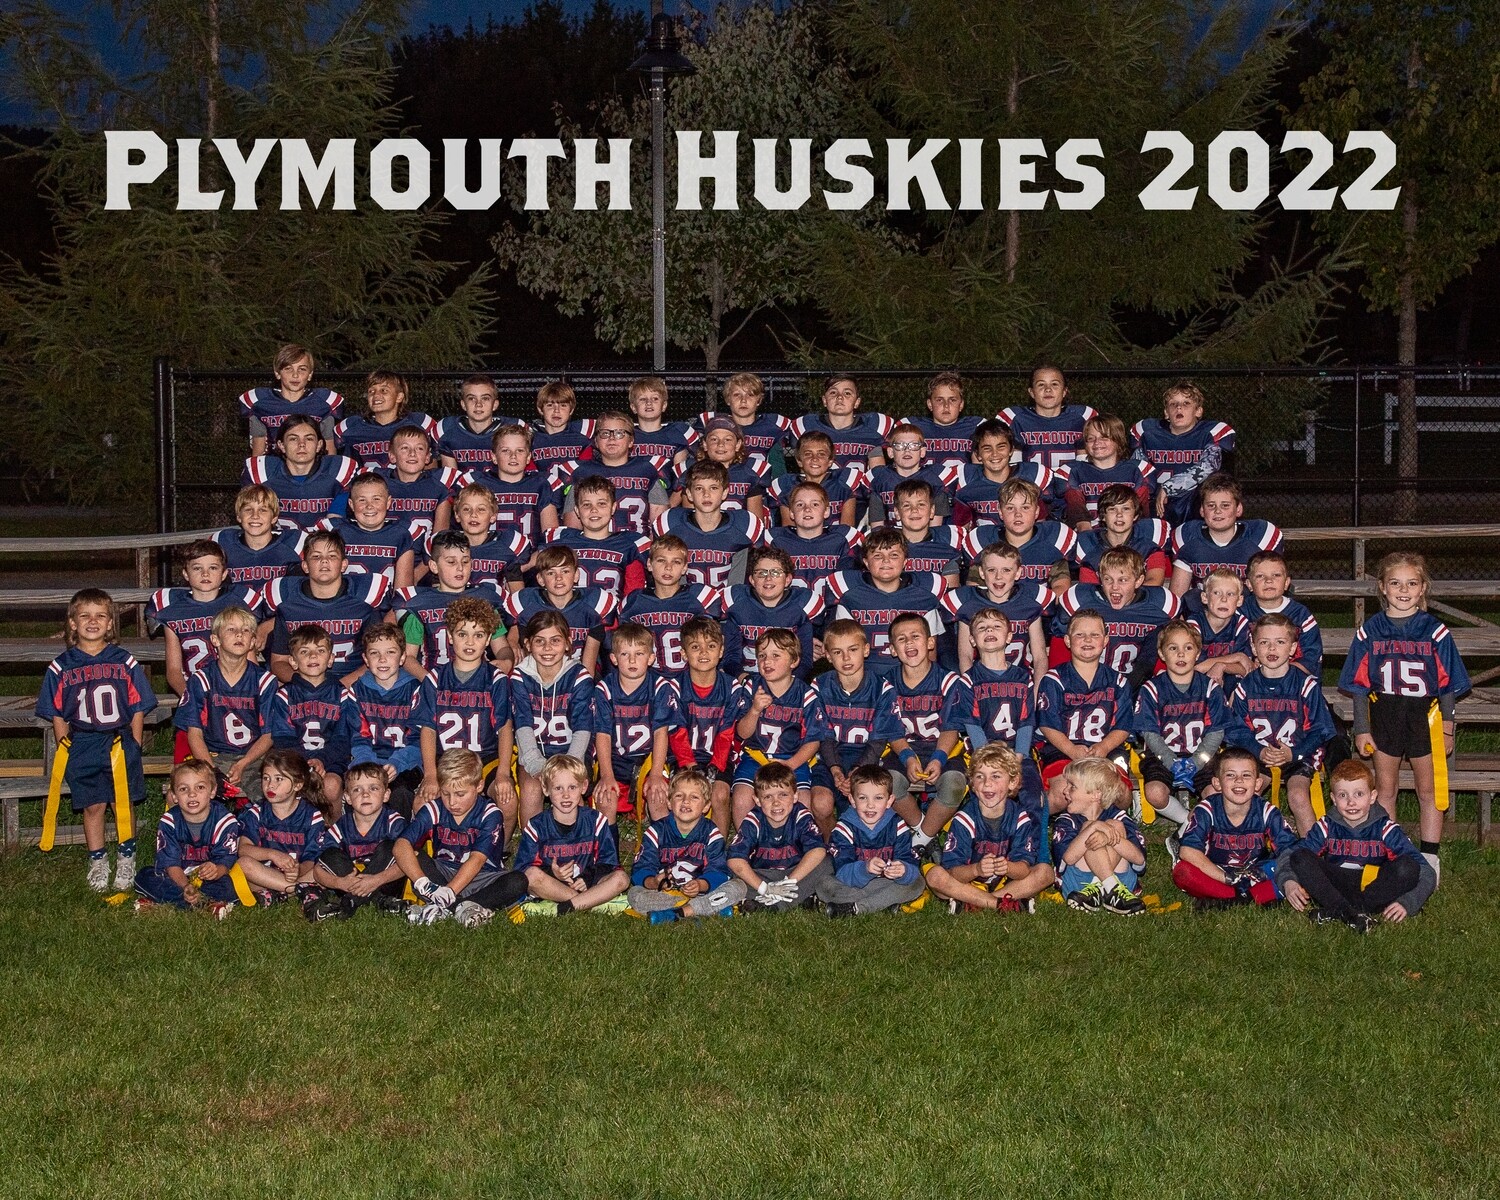 Plymouth Huskies All Team Photo 8x10